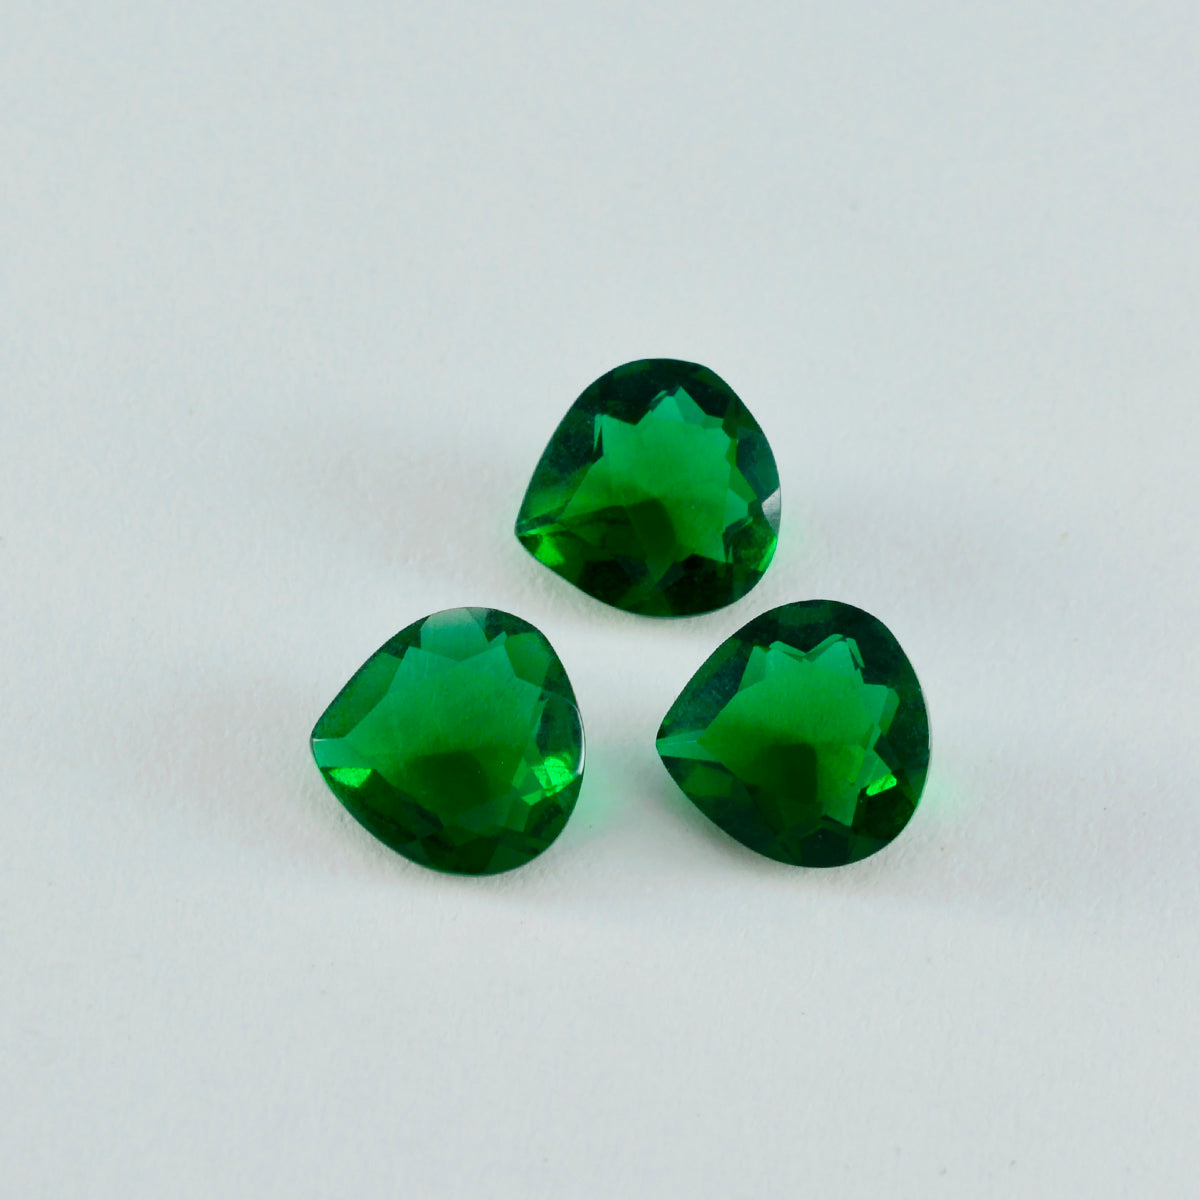 Riyogems 1PC groene smaragd CZ gefacetteerde 8x8 mm hartvorm knappe kwaliteitssteen